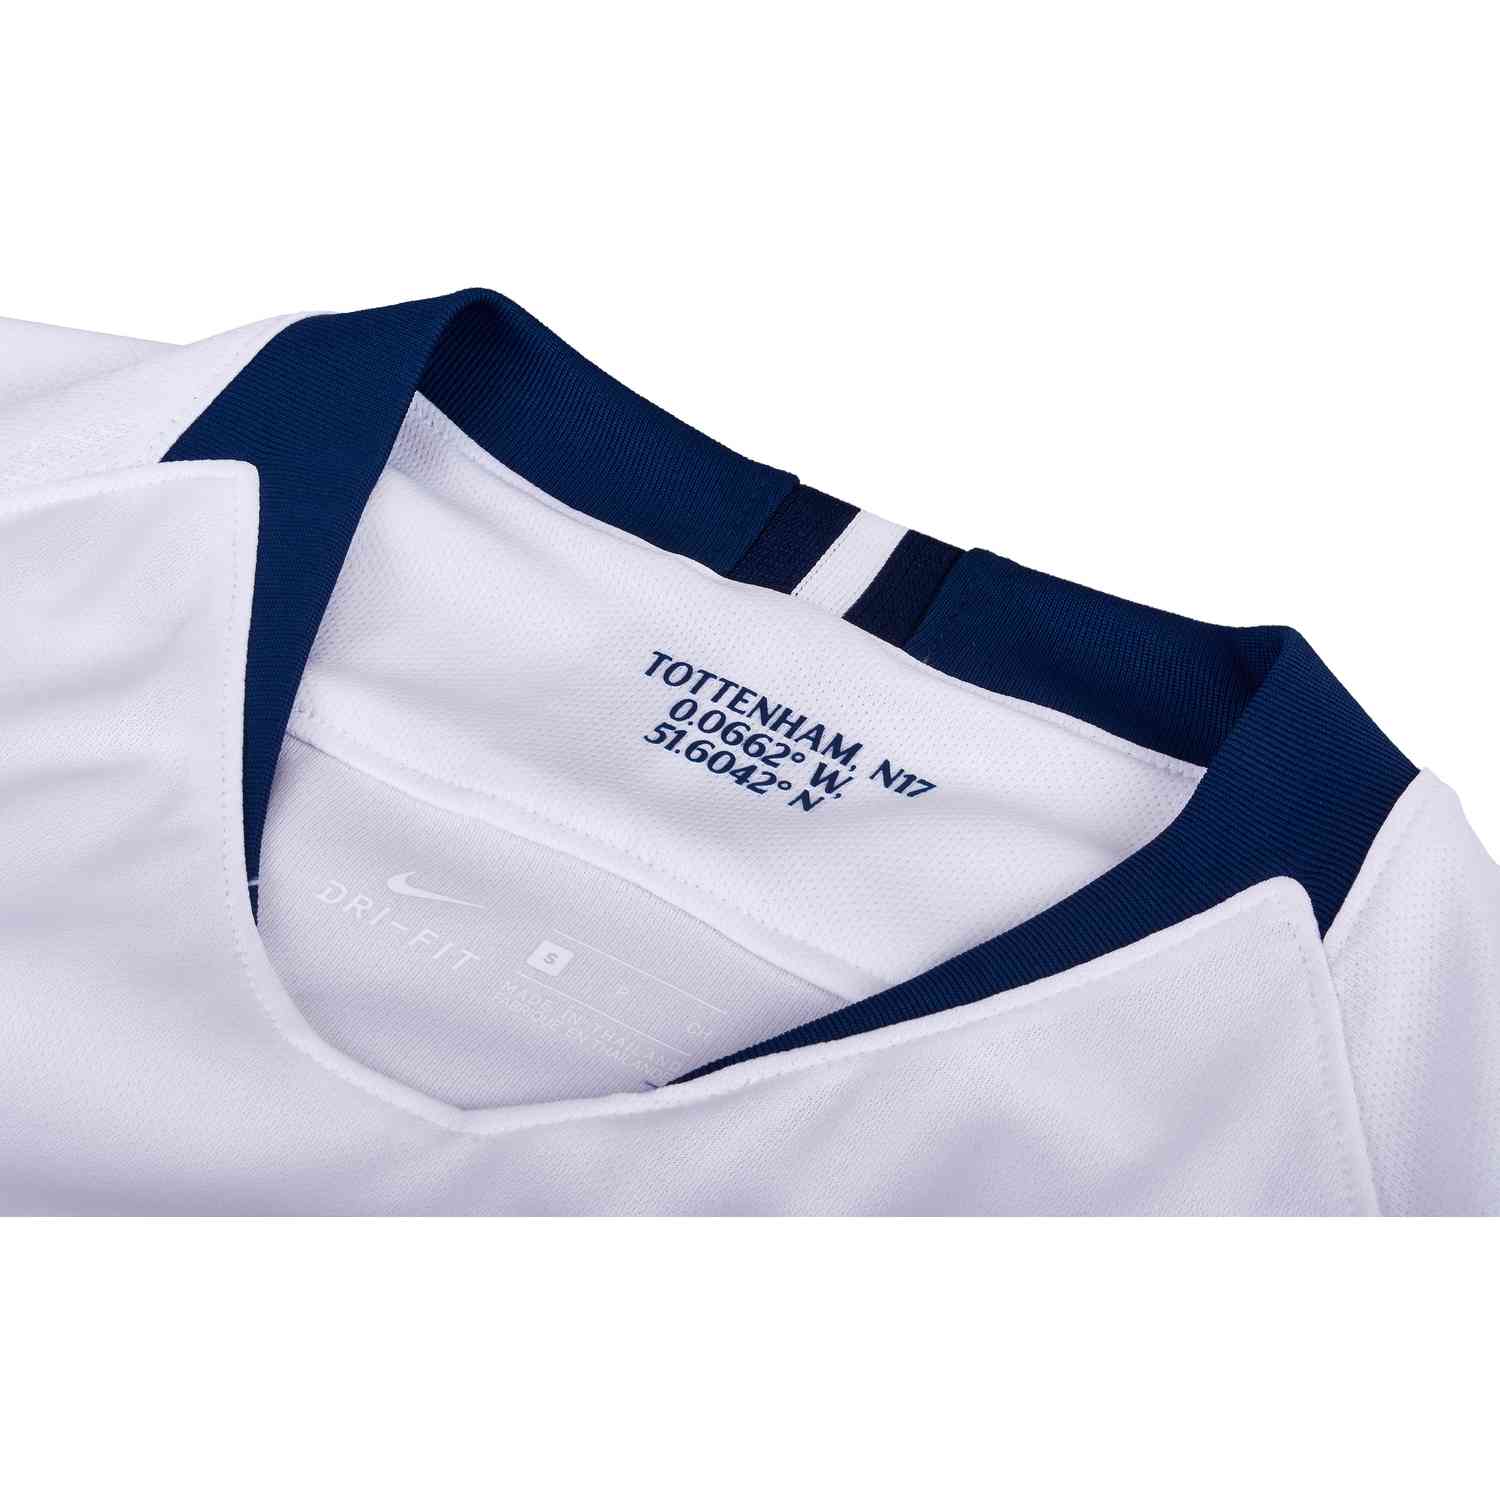 Tottenham Hotspur Jersey 2018 2019 Away SMALL Shirt Nike 919004-430 ig93